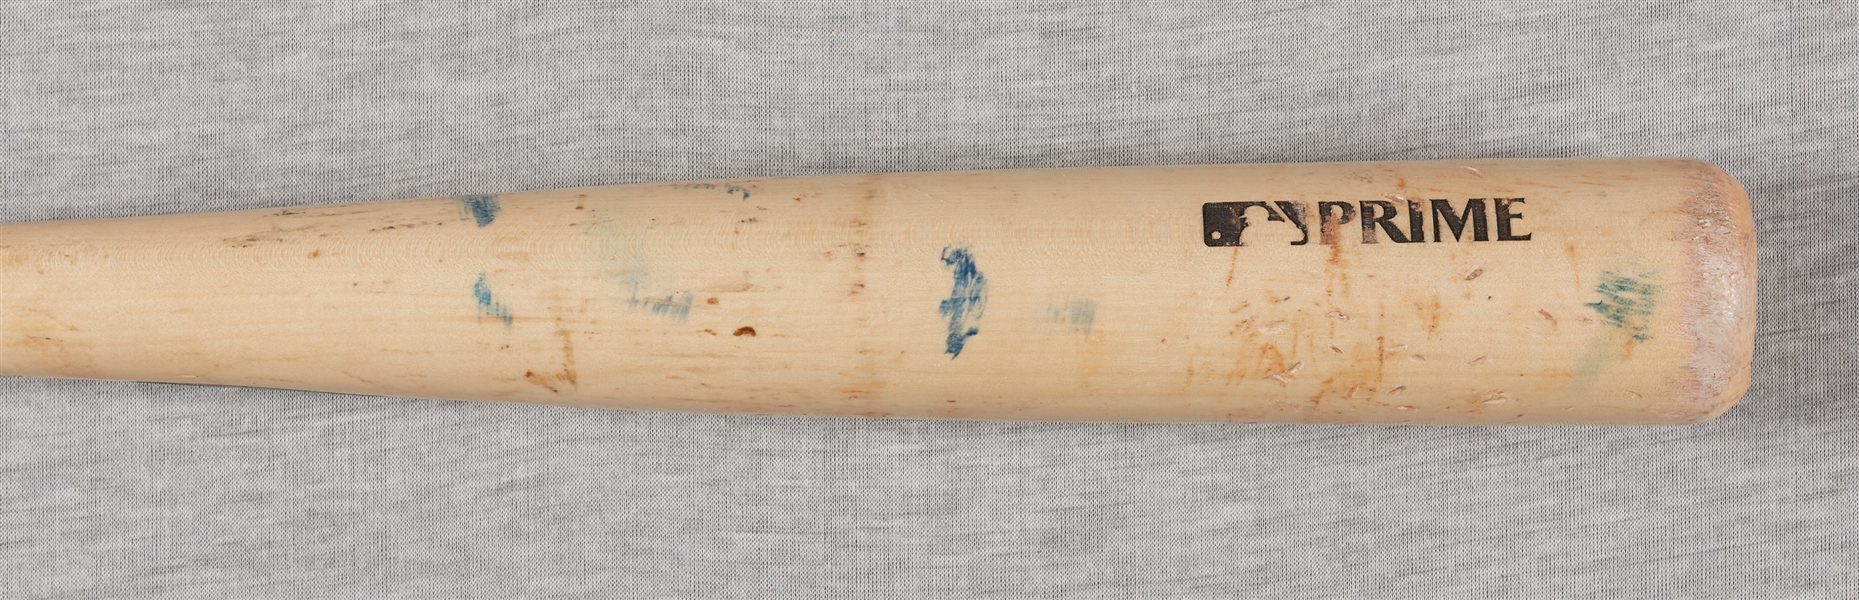 Didi Gregorius 2018 Game-Used Louisville Slugger Bat with Signed Baseball (MLB) (Steiner)